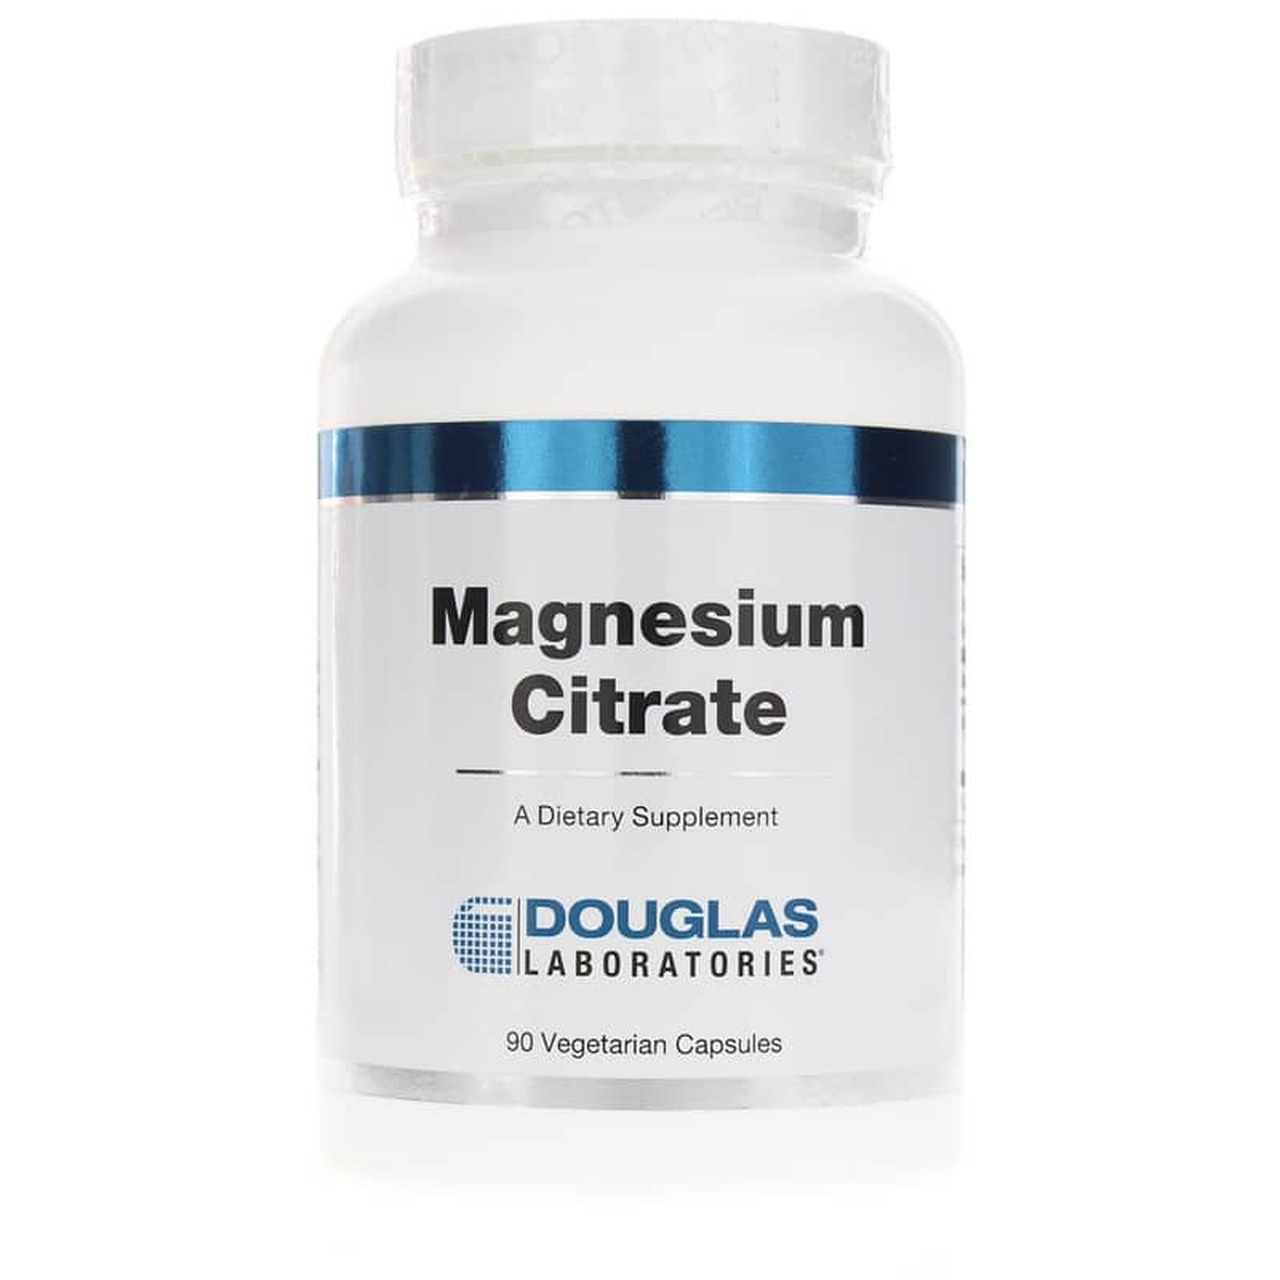 MagnesiumCitrate